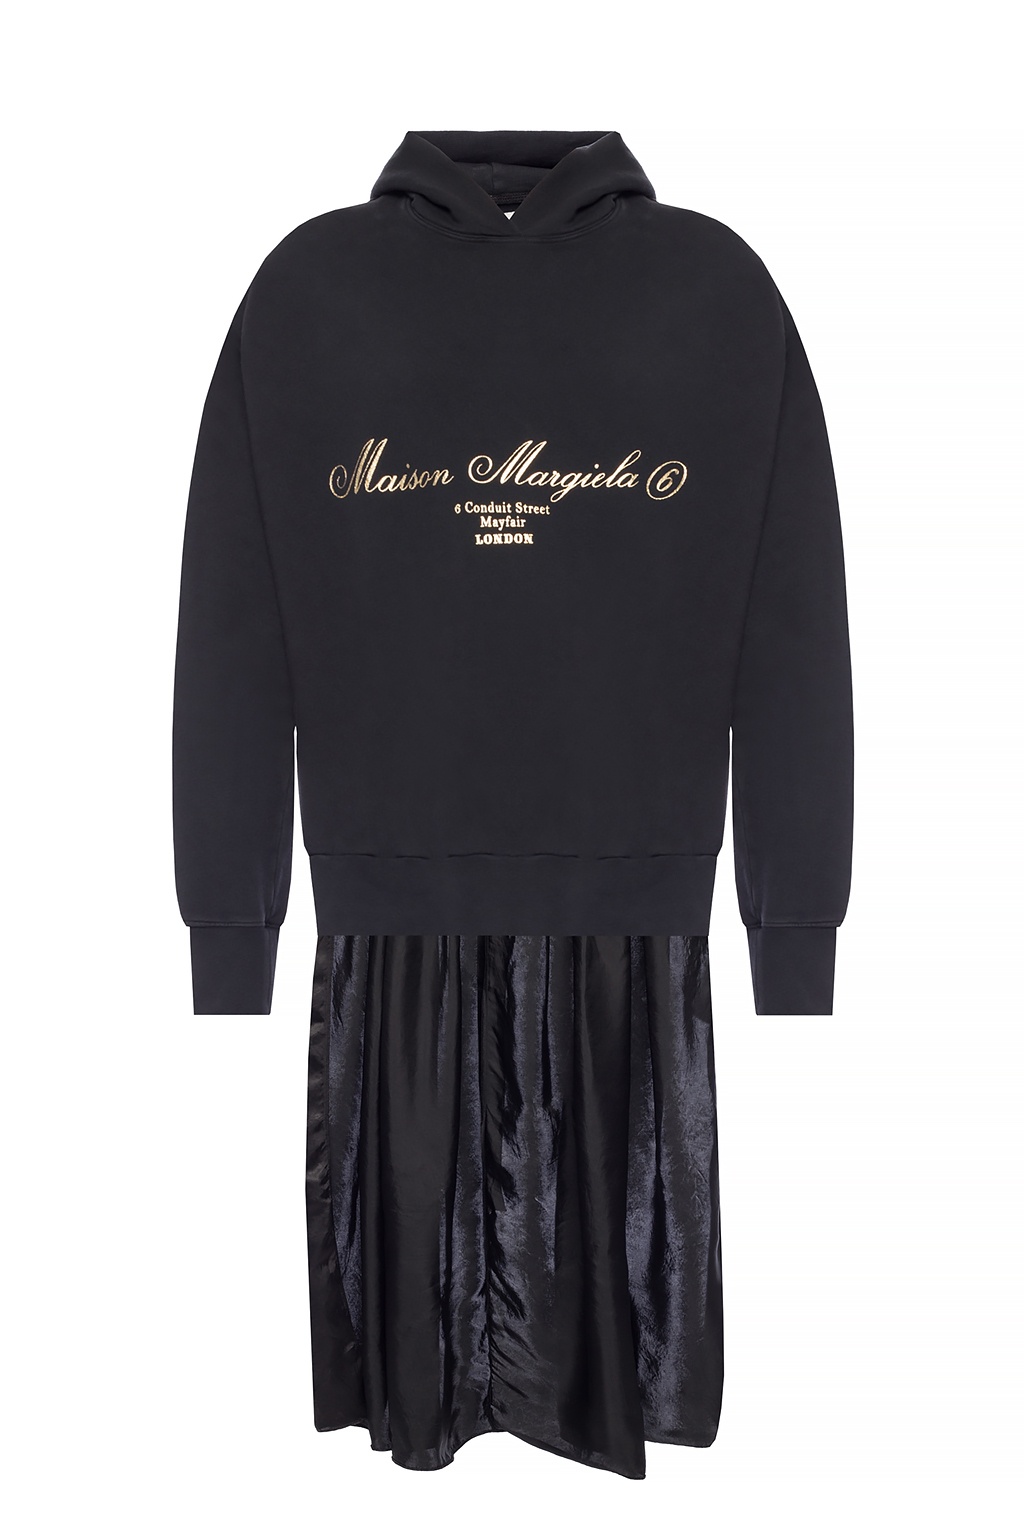 MM6 Maison Margiela Sweatshirt with dress effect | Women's